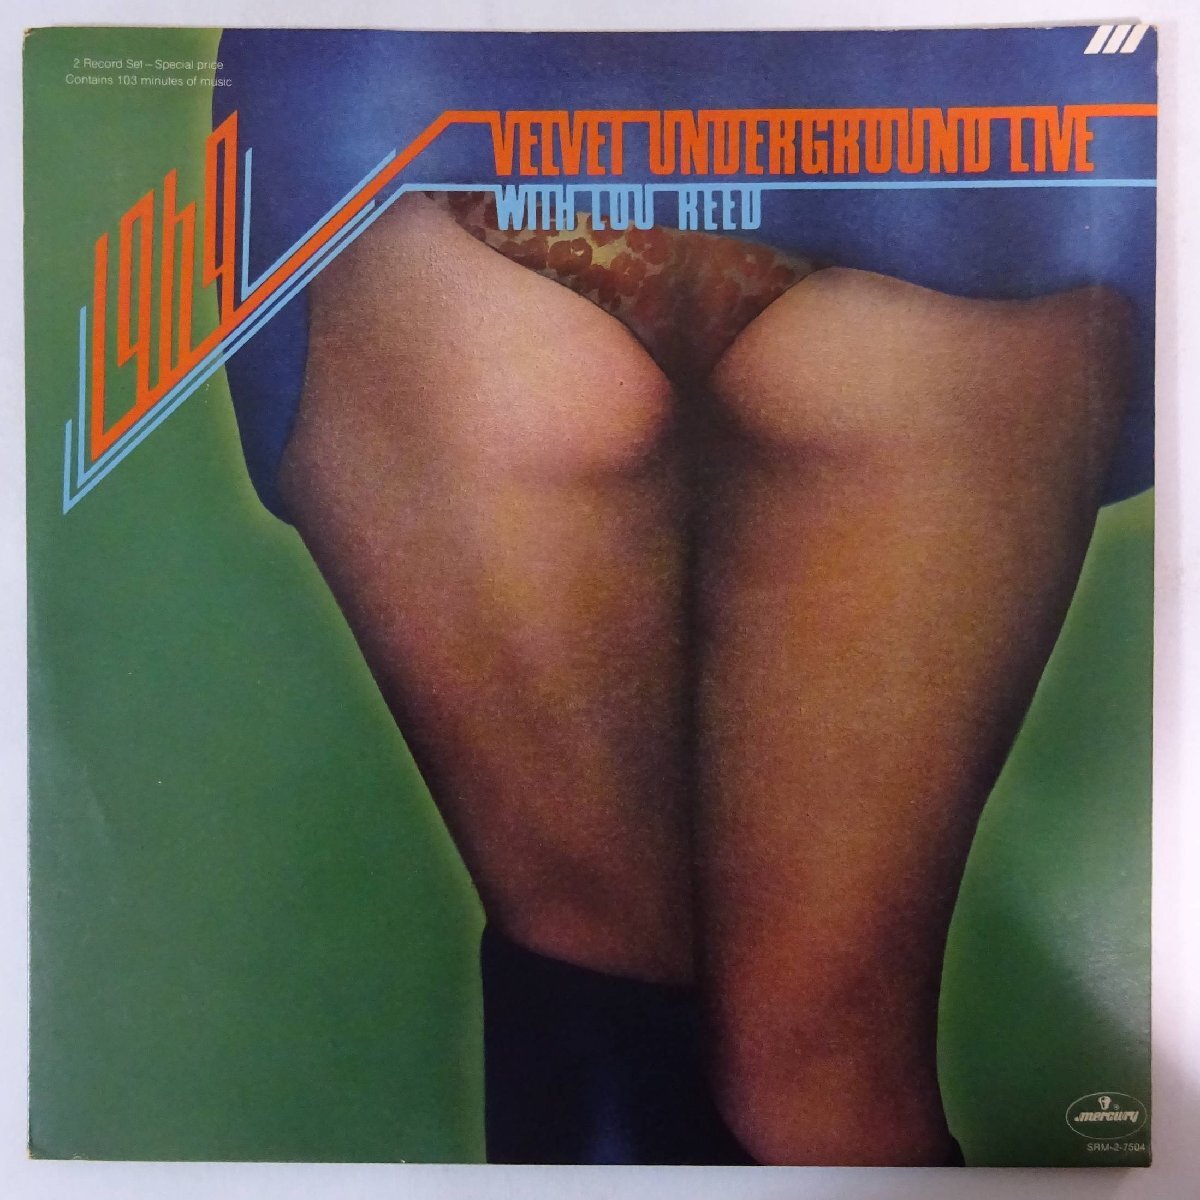 11183213;【US盤/2LP】Velvet Underground With Lou Reed / 1969 Velvet Underground Live With Lou Reed_画像1